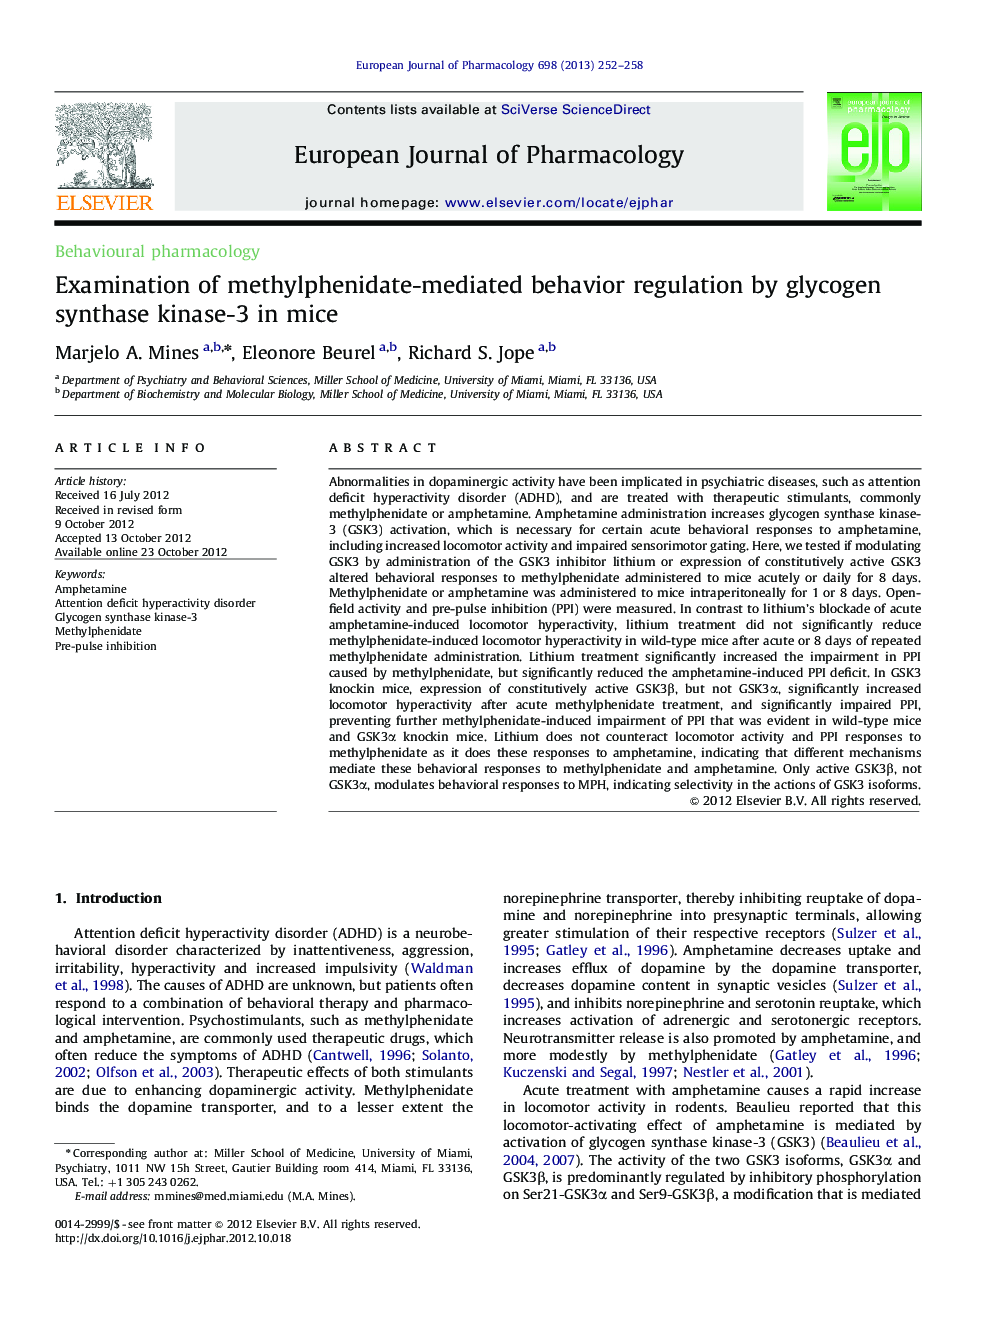 Examination of methylphenidate-mediated behavior regulation by glycogen synthase kinase-3 in mice